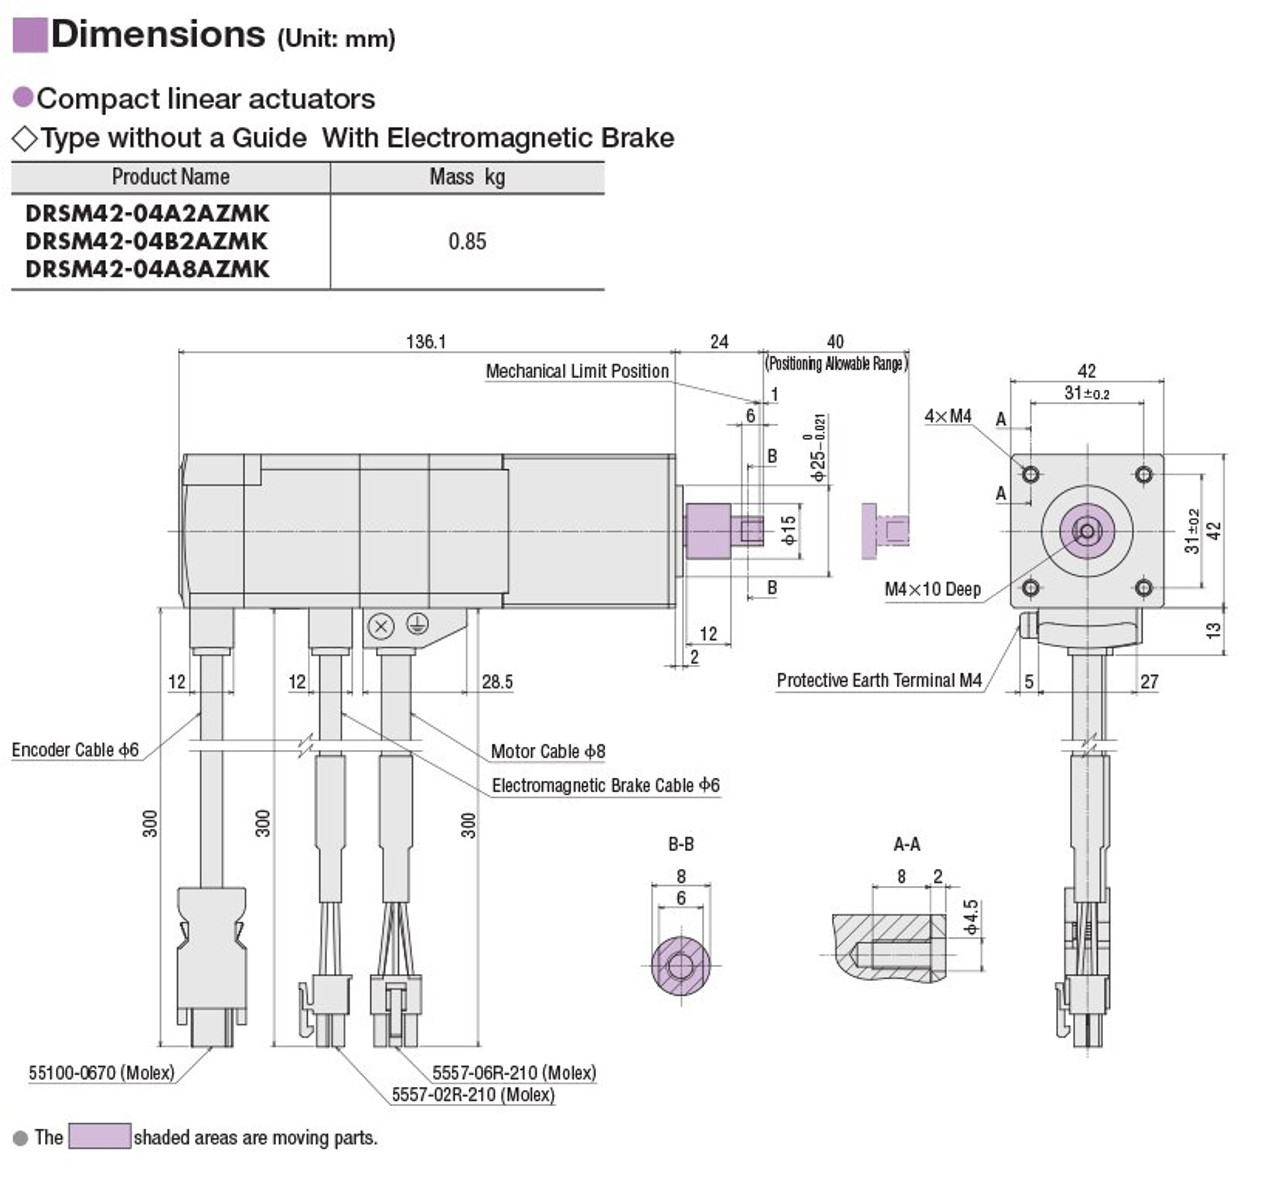 DRSM42-04A2AZMK - Dimensions